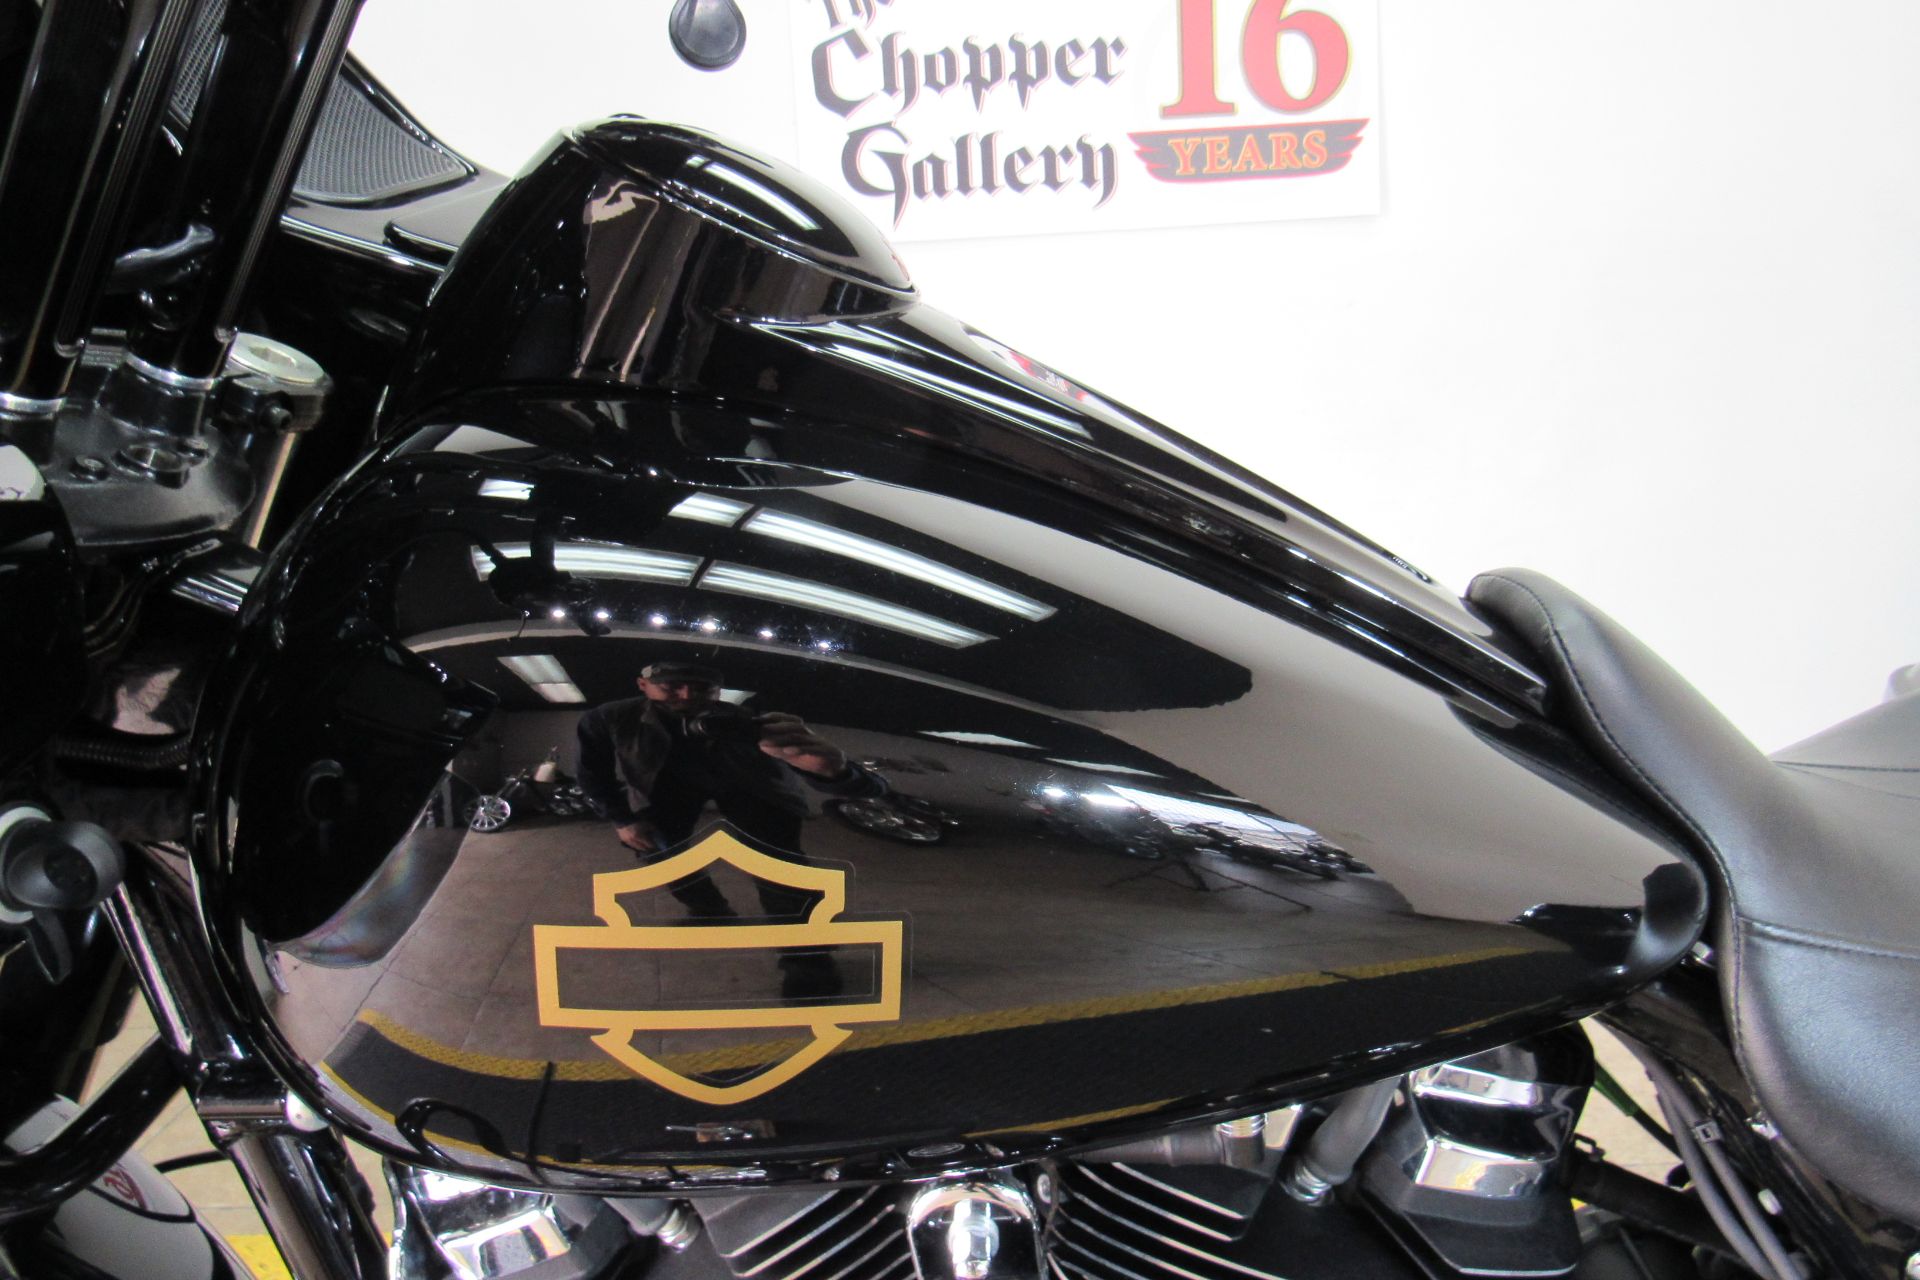 2020 Harley-Davidson Road Glide® Special in Temecula, California - Photo 12